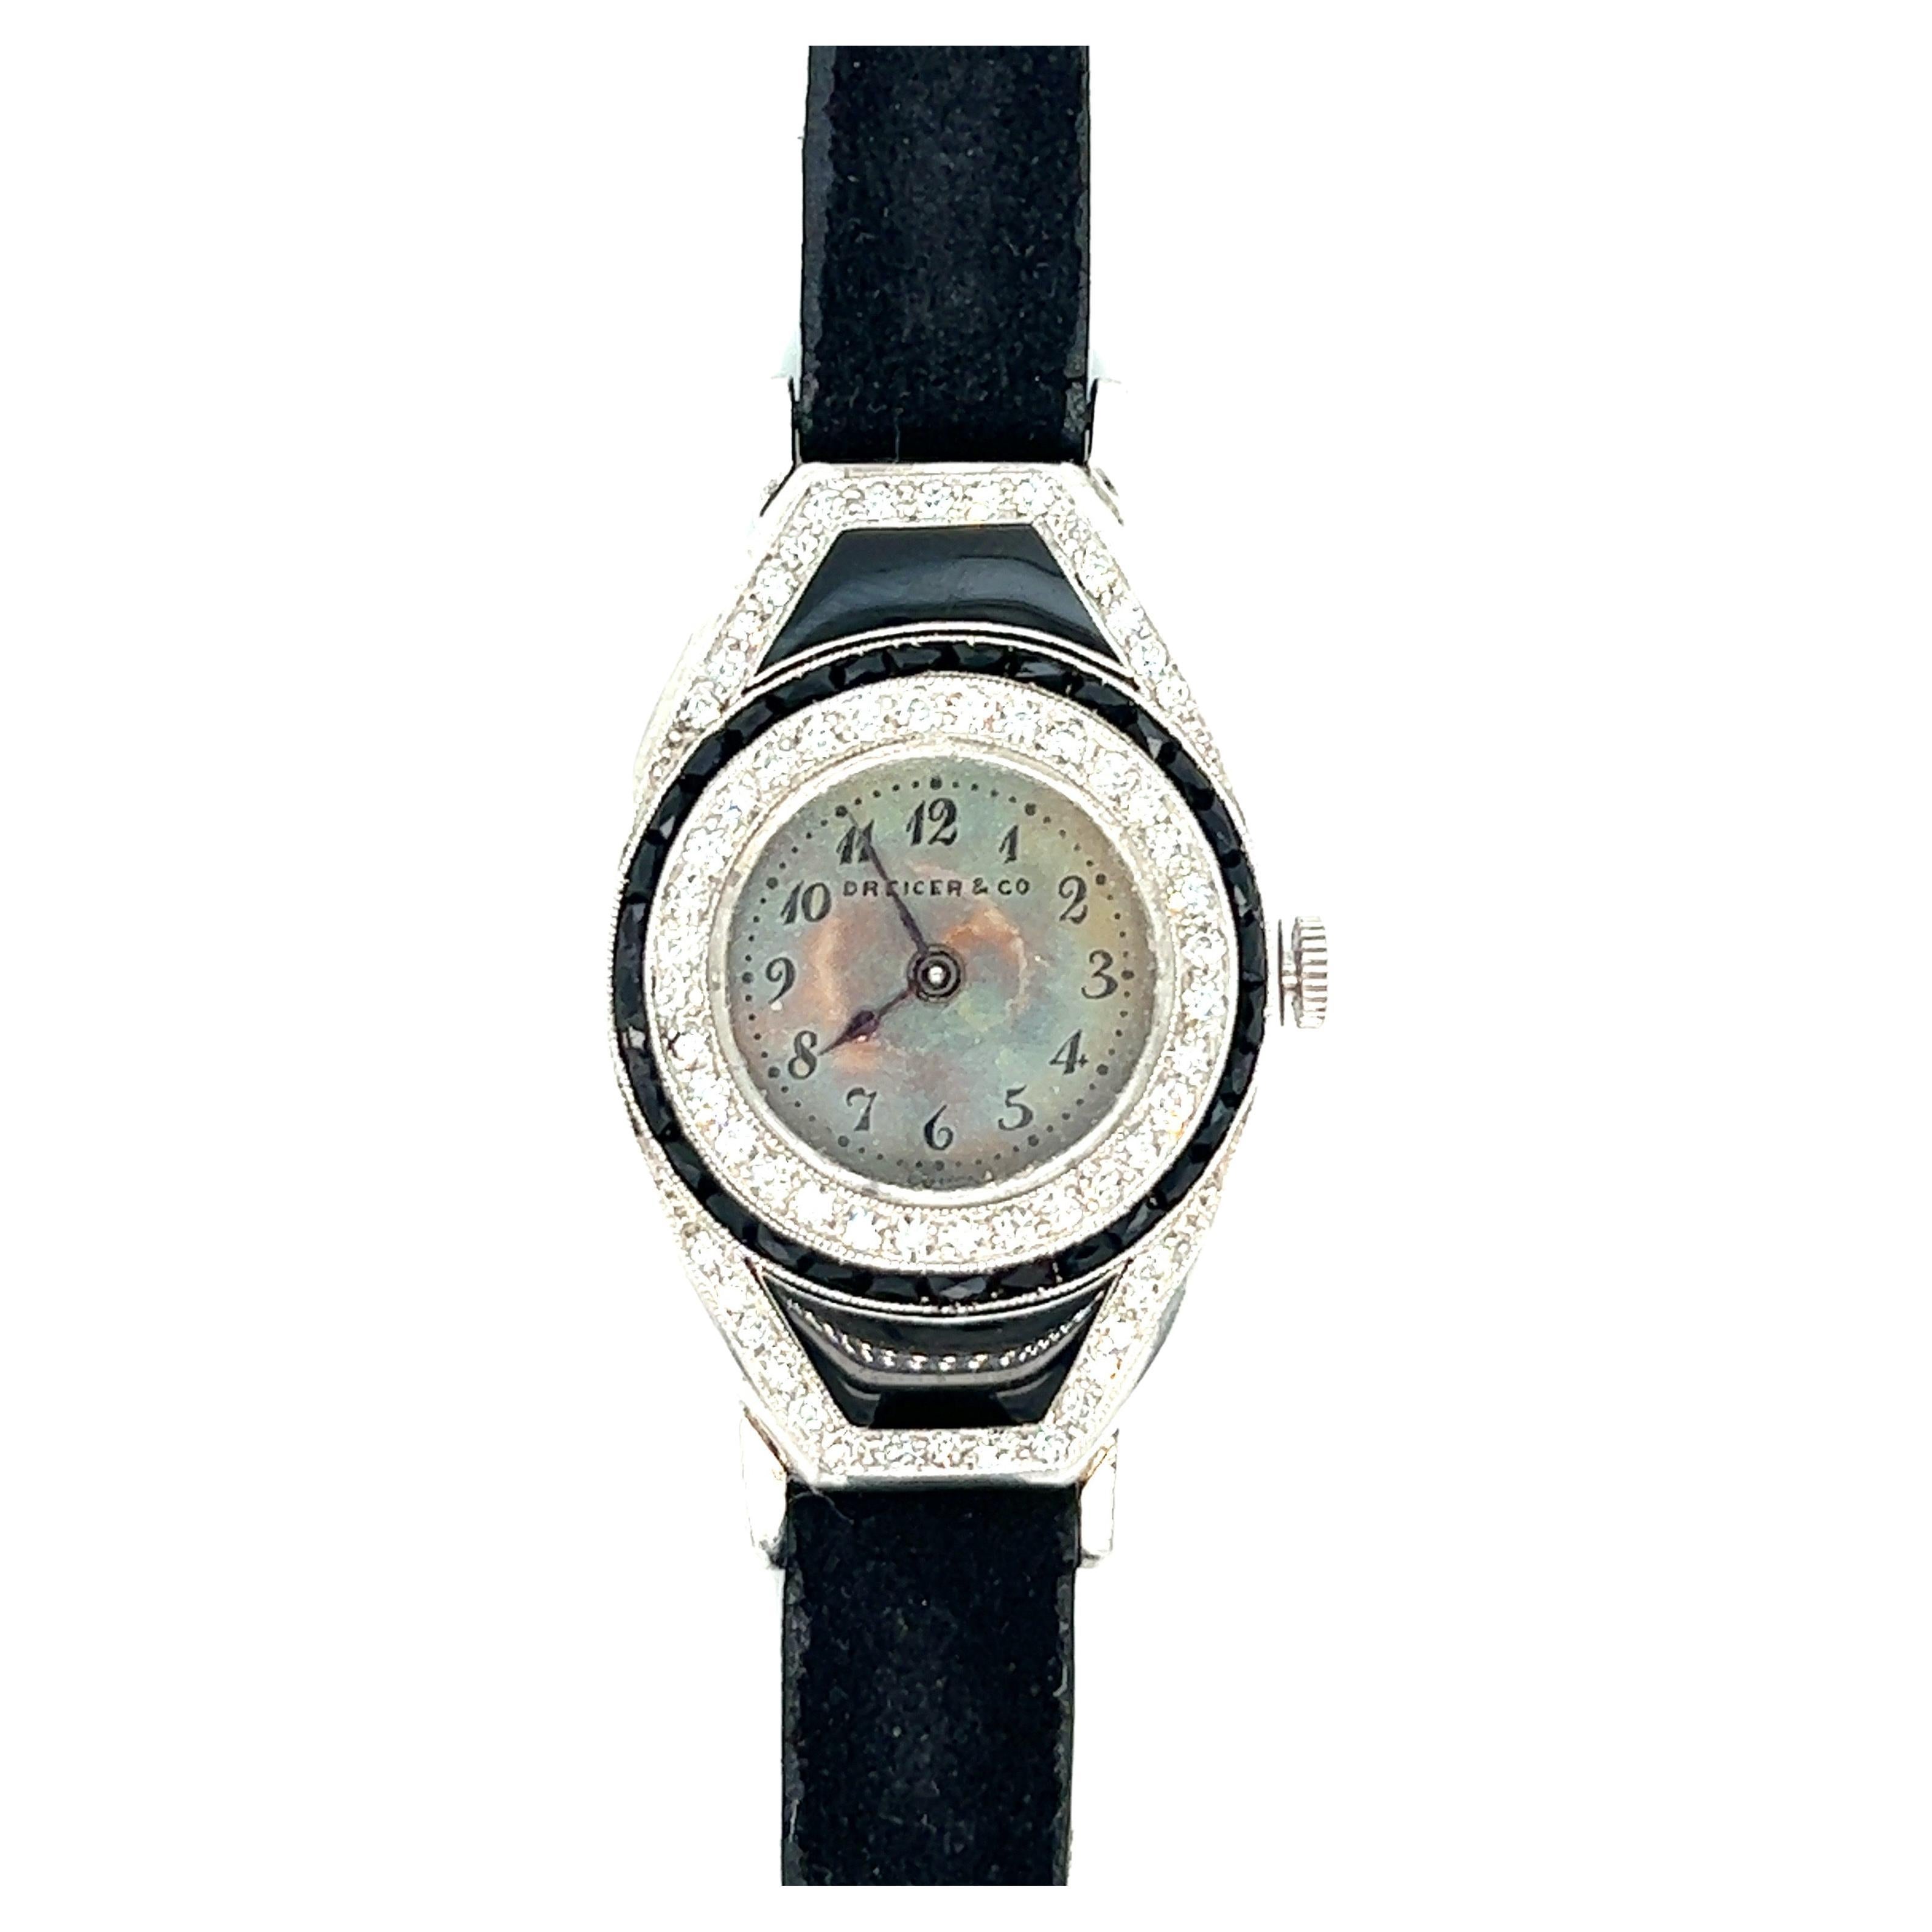 Dreicer & Co. Art Deco Lady's Watch For Sale